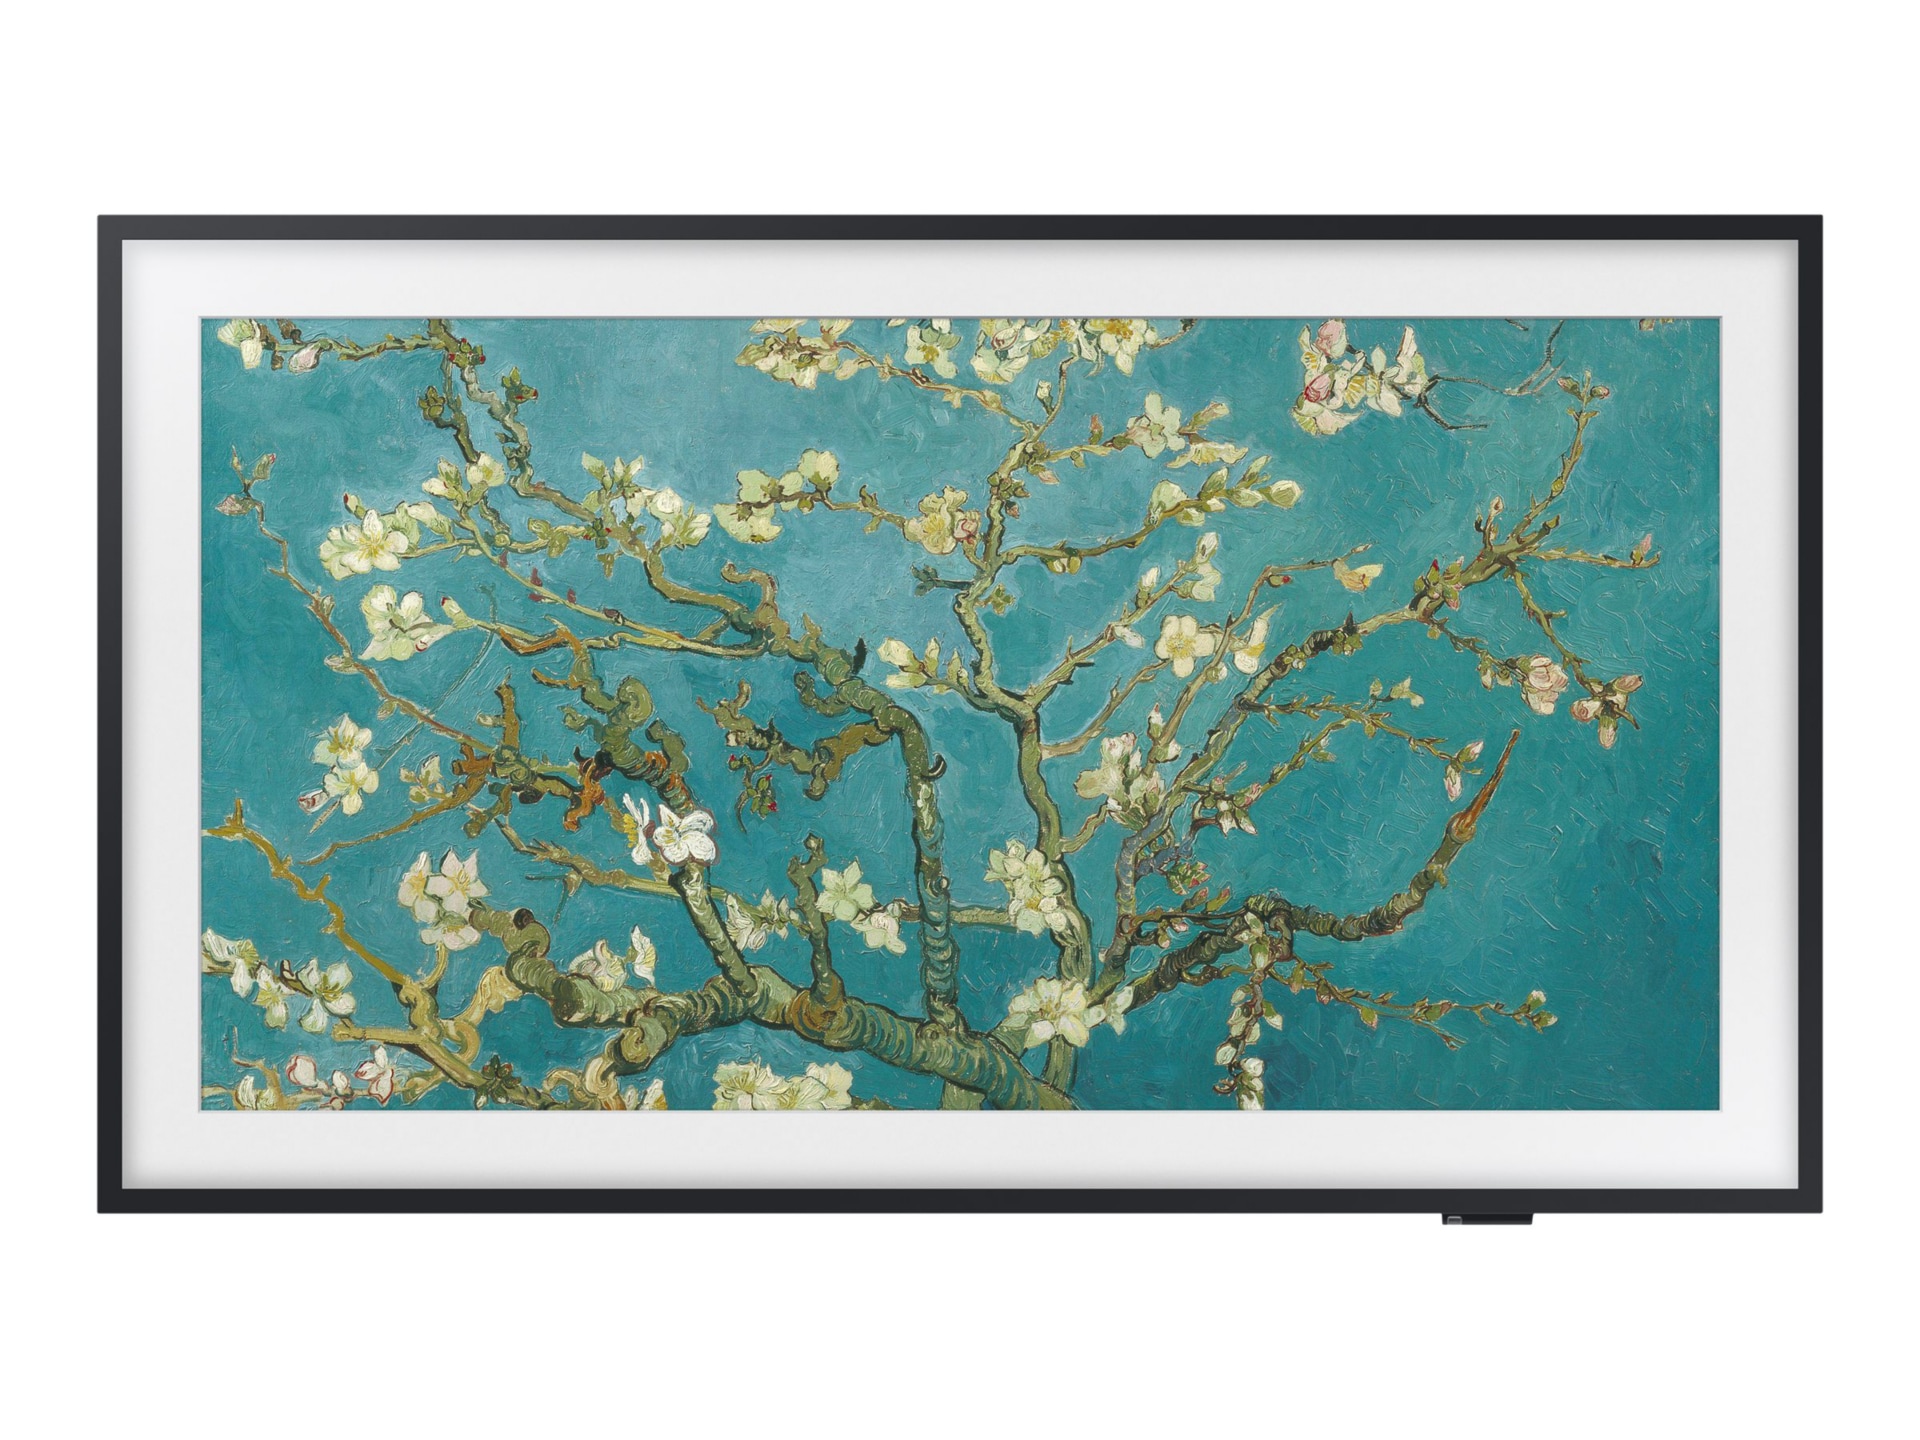 Samsung QN32LS03CBF The Frame LS03C Series - 32" Class (31.5" viewable) LED-backlit LCD TV - QLED - Full HD